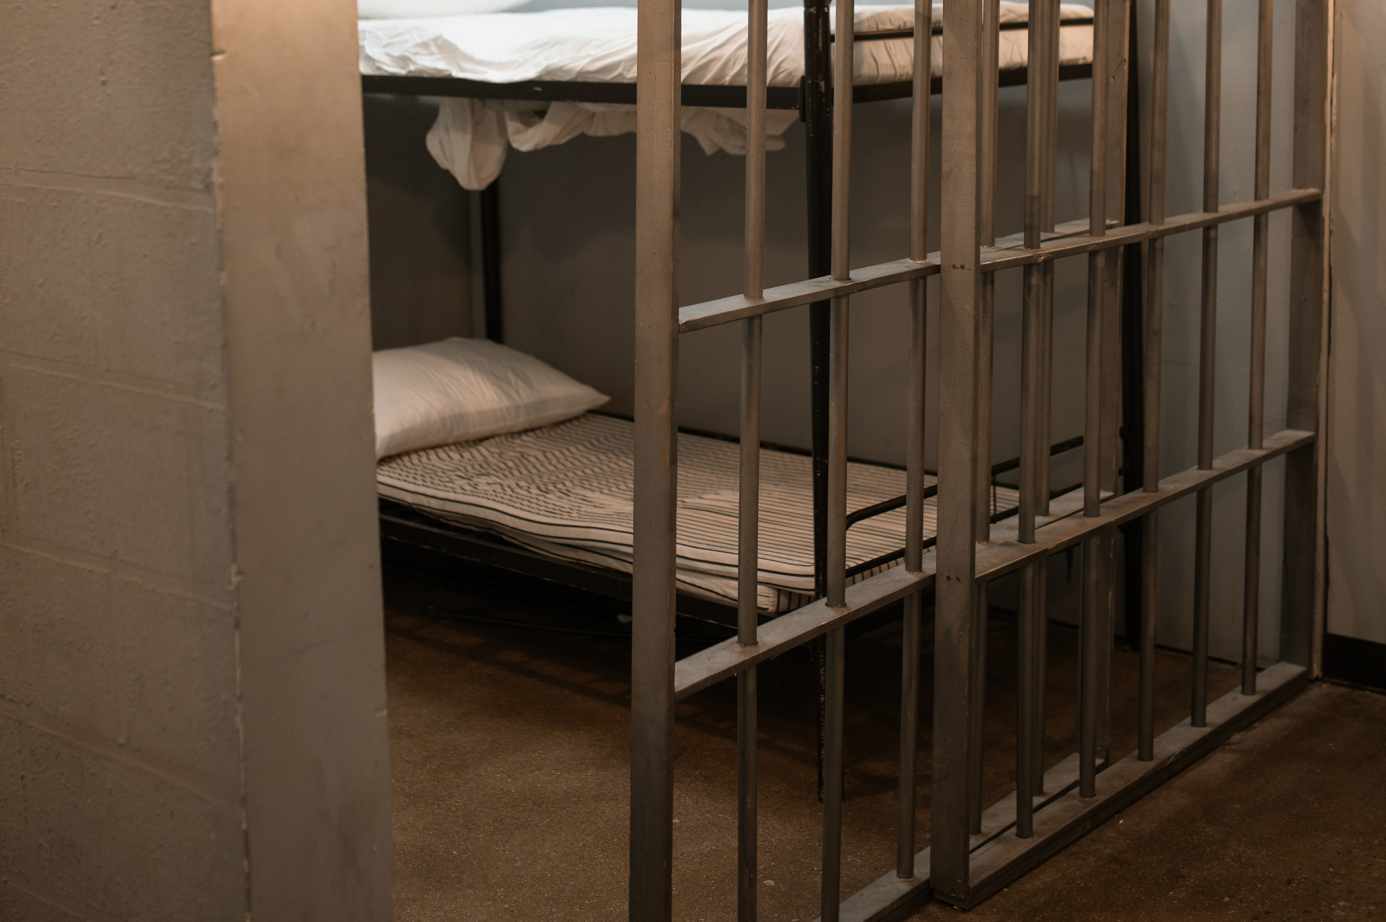 Empty jail cell; image by RODNAE Productions, via Unsplash.com.